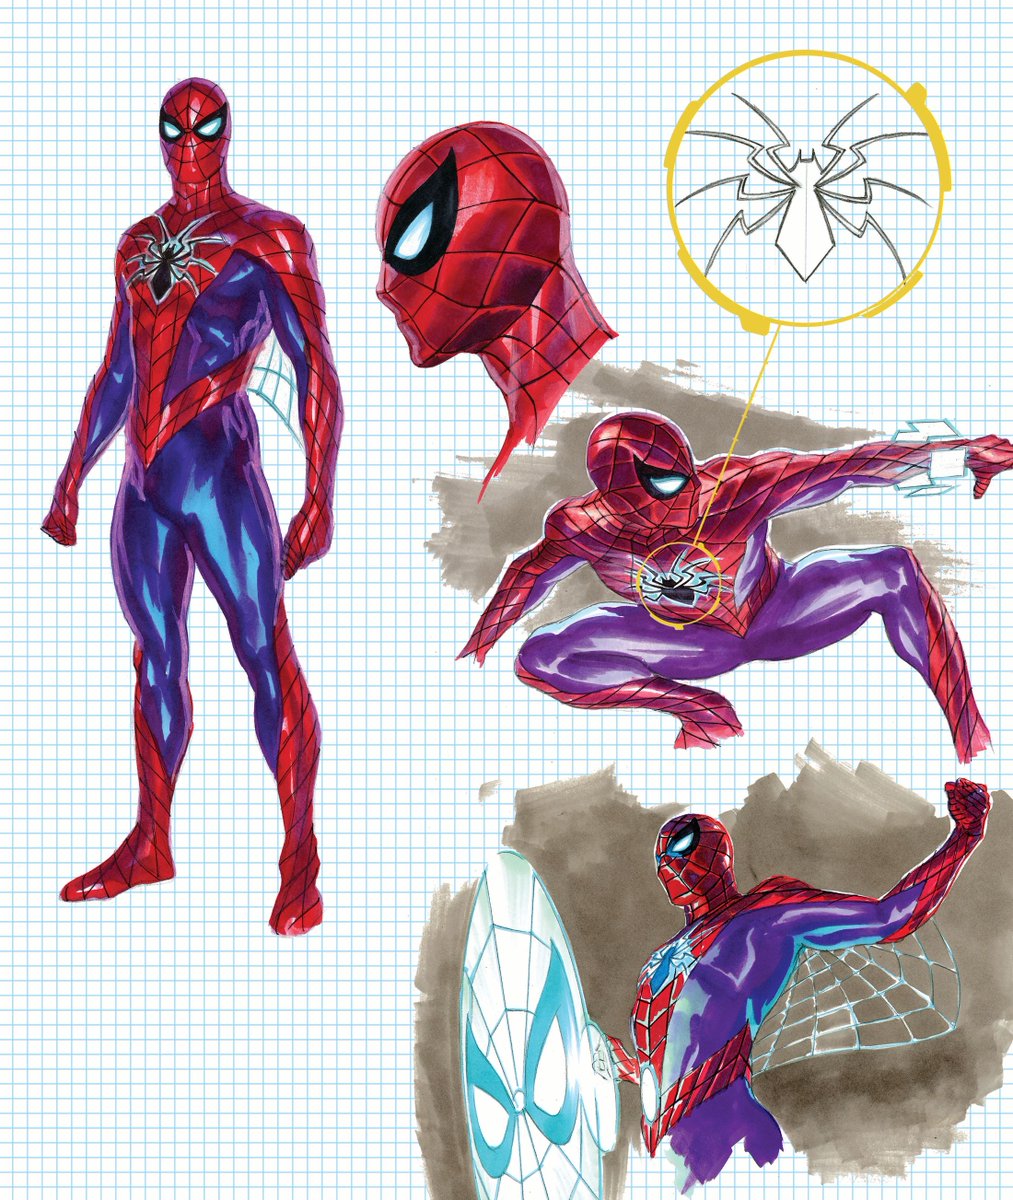 RT @thealexrossart: Spider-Man #spiderman #marvel #illustration #comicartist #mondaymotivation https://t.co/aT39sJ4sKb